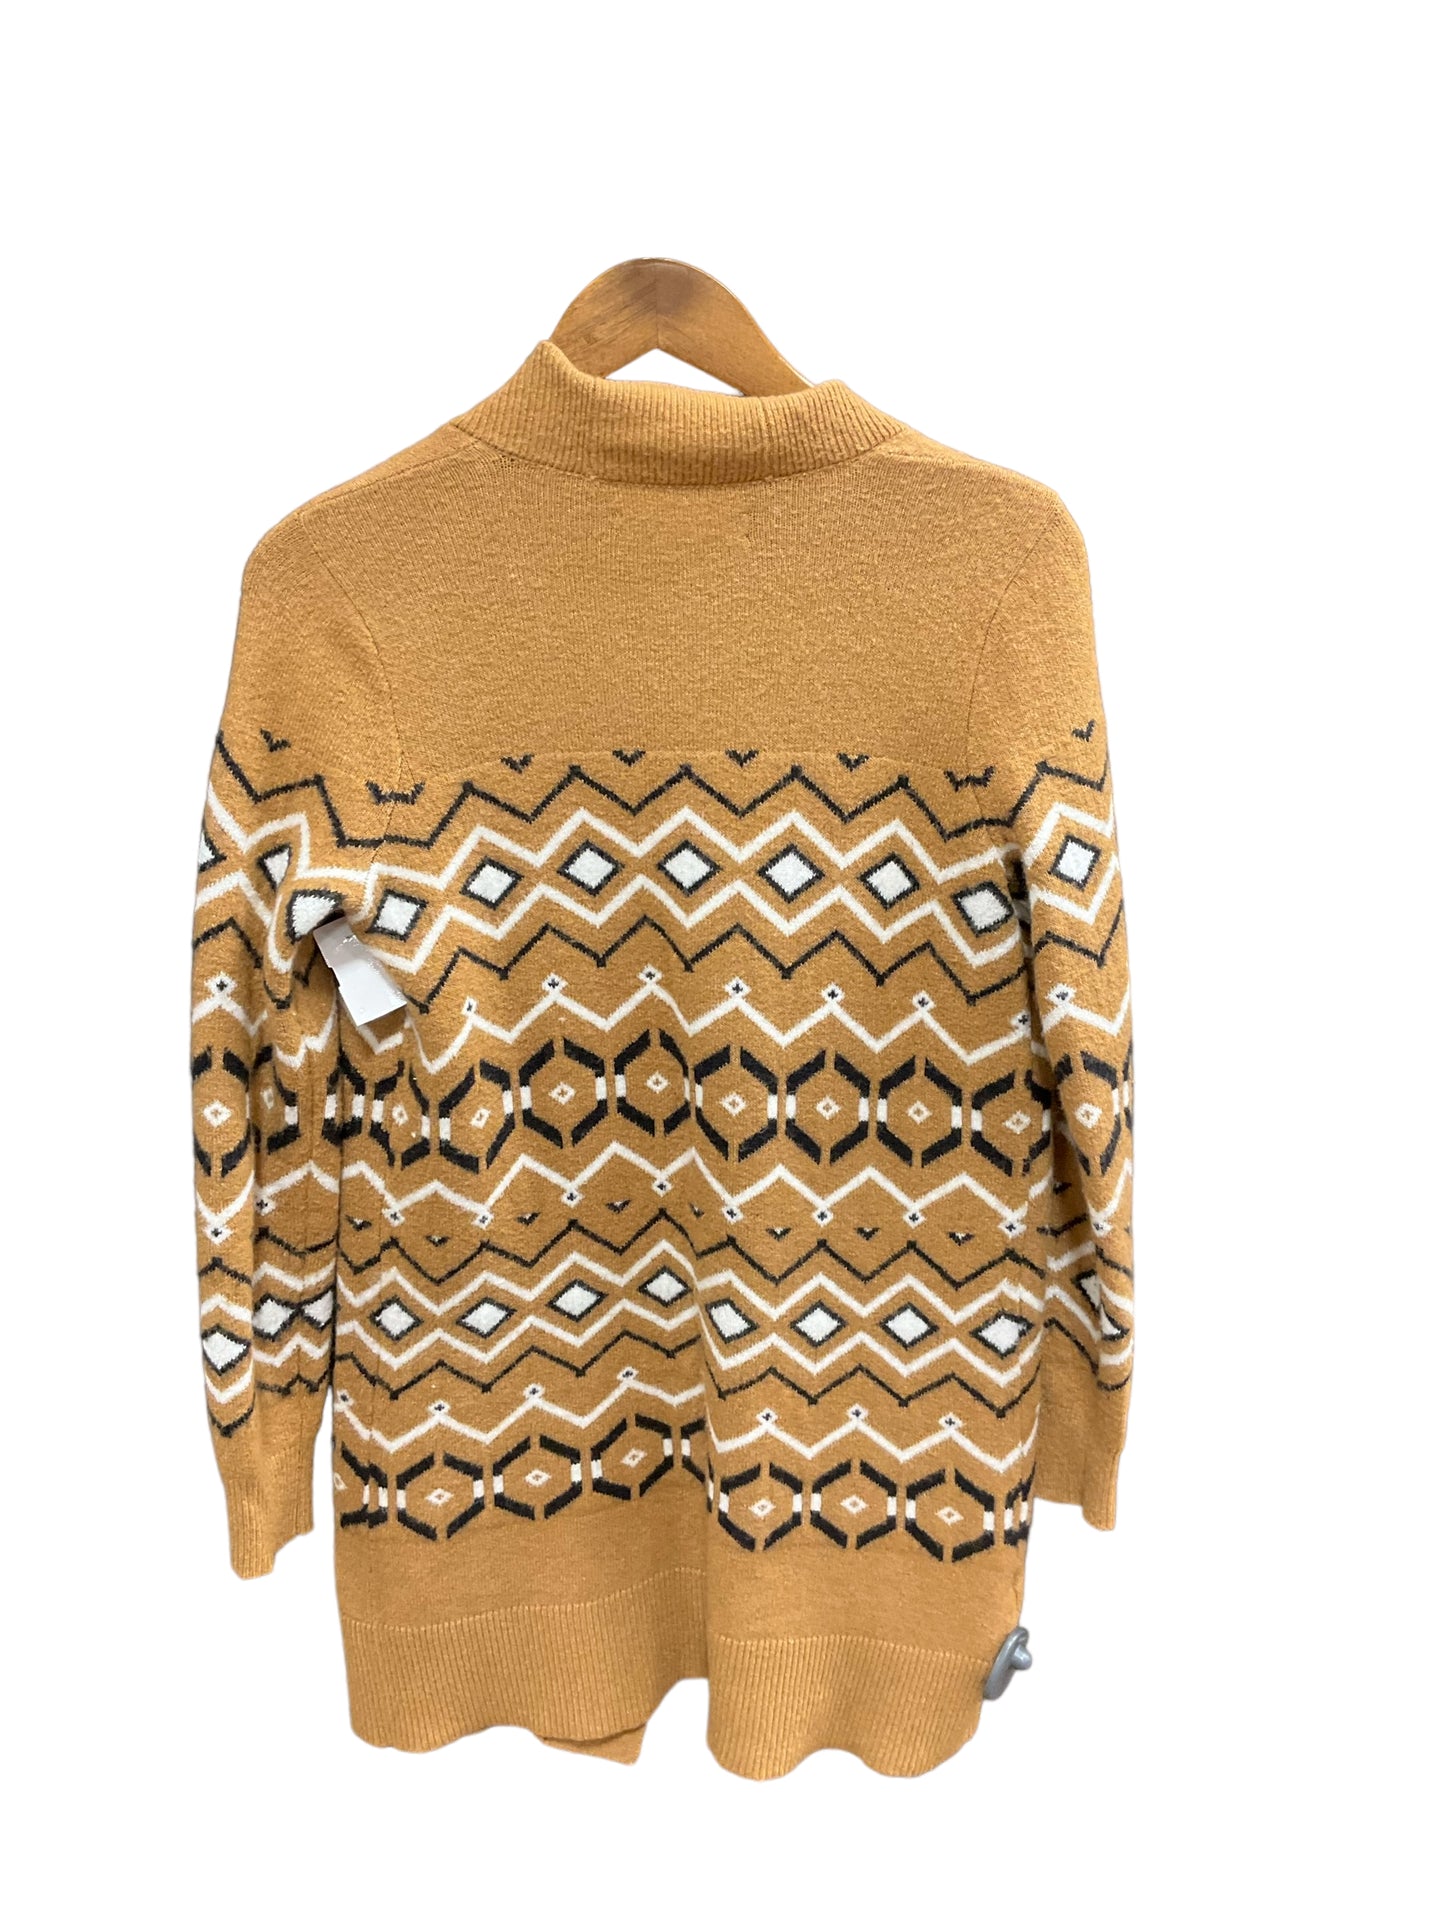 Sweater Cardigan By Loft  Size: Xs